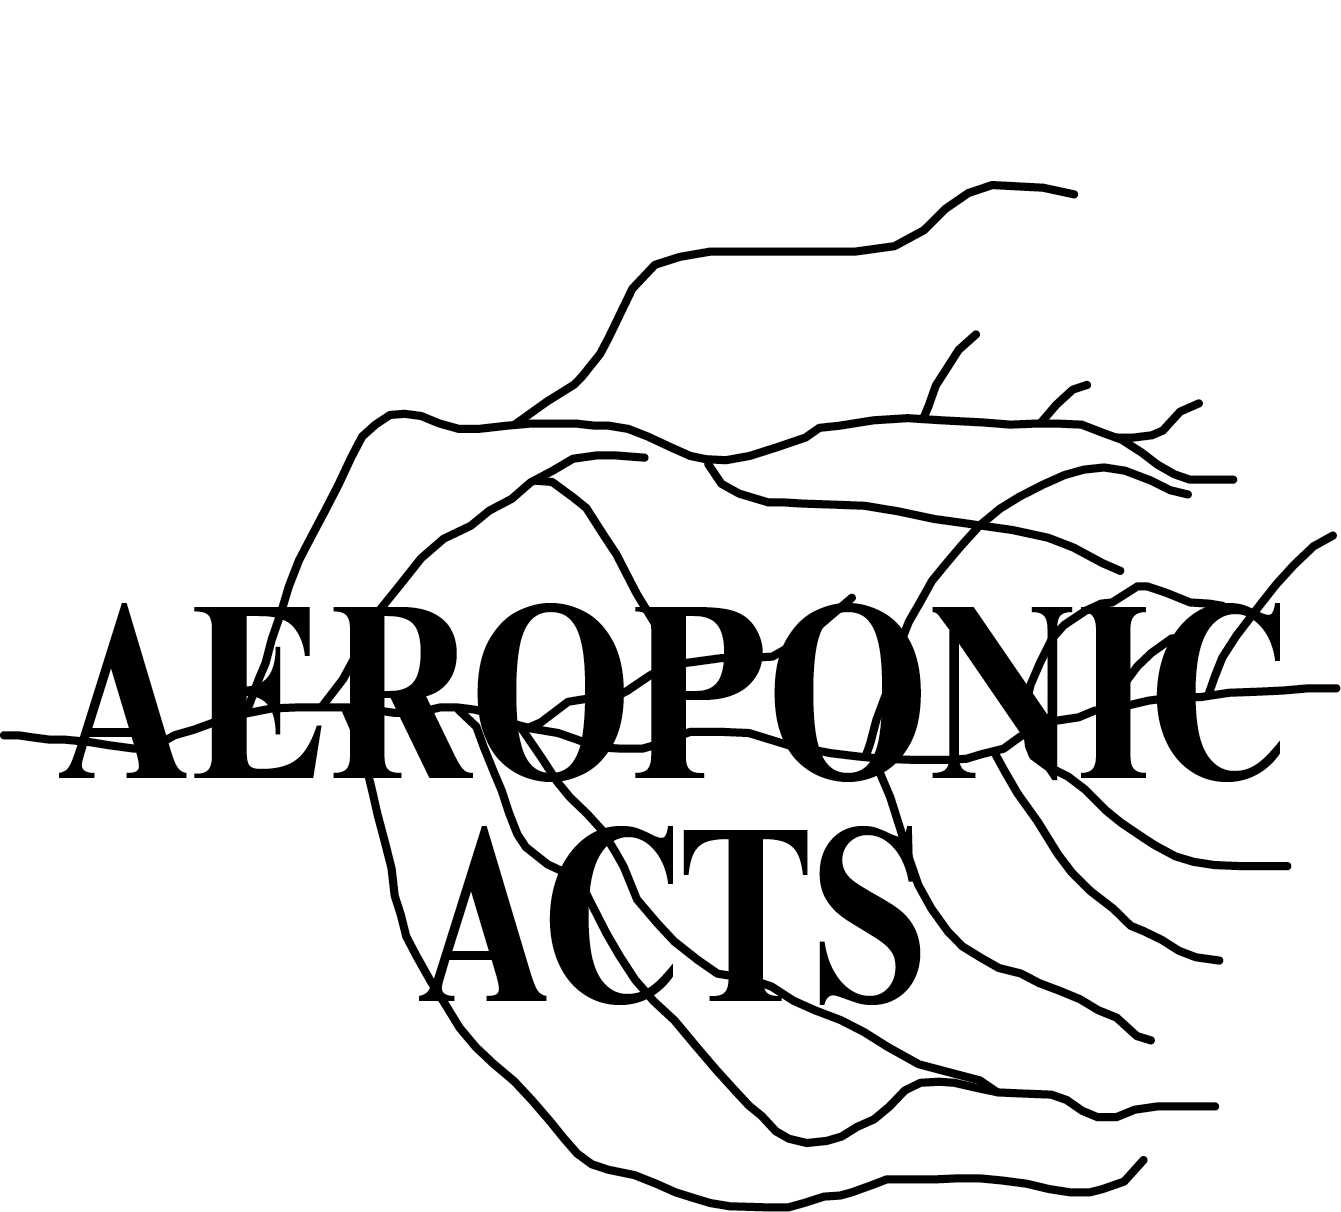 AEROPONIC ACTS (logo)